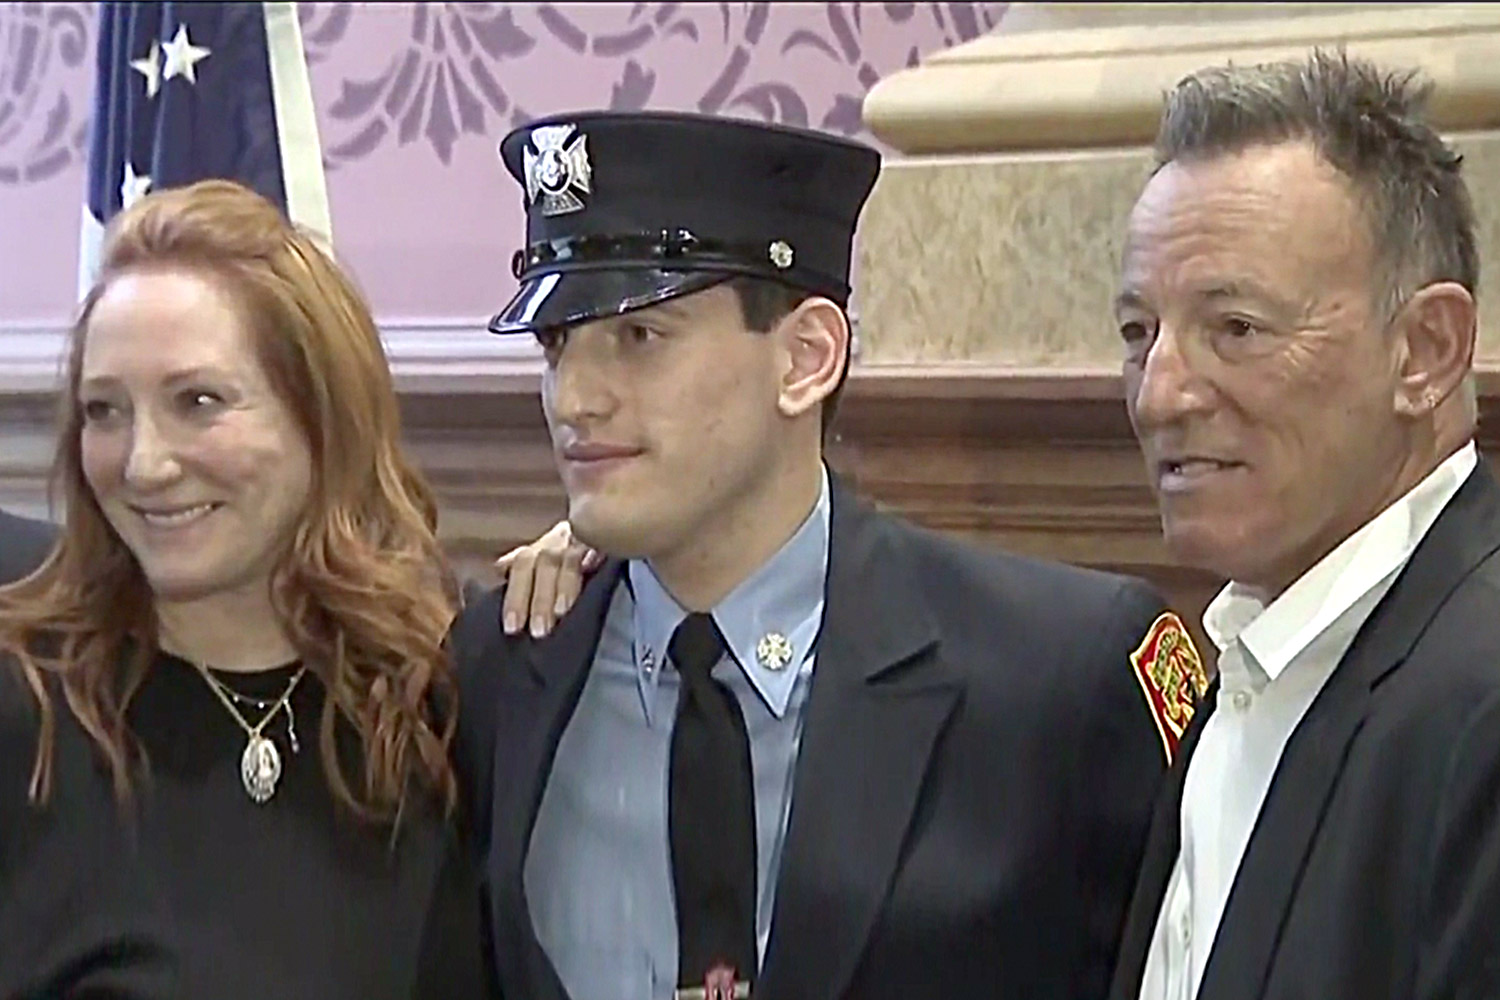 bruce springsteen's son sworn in as firefighter